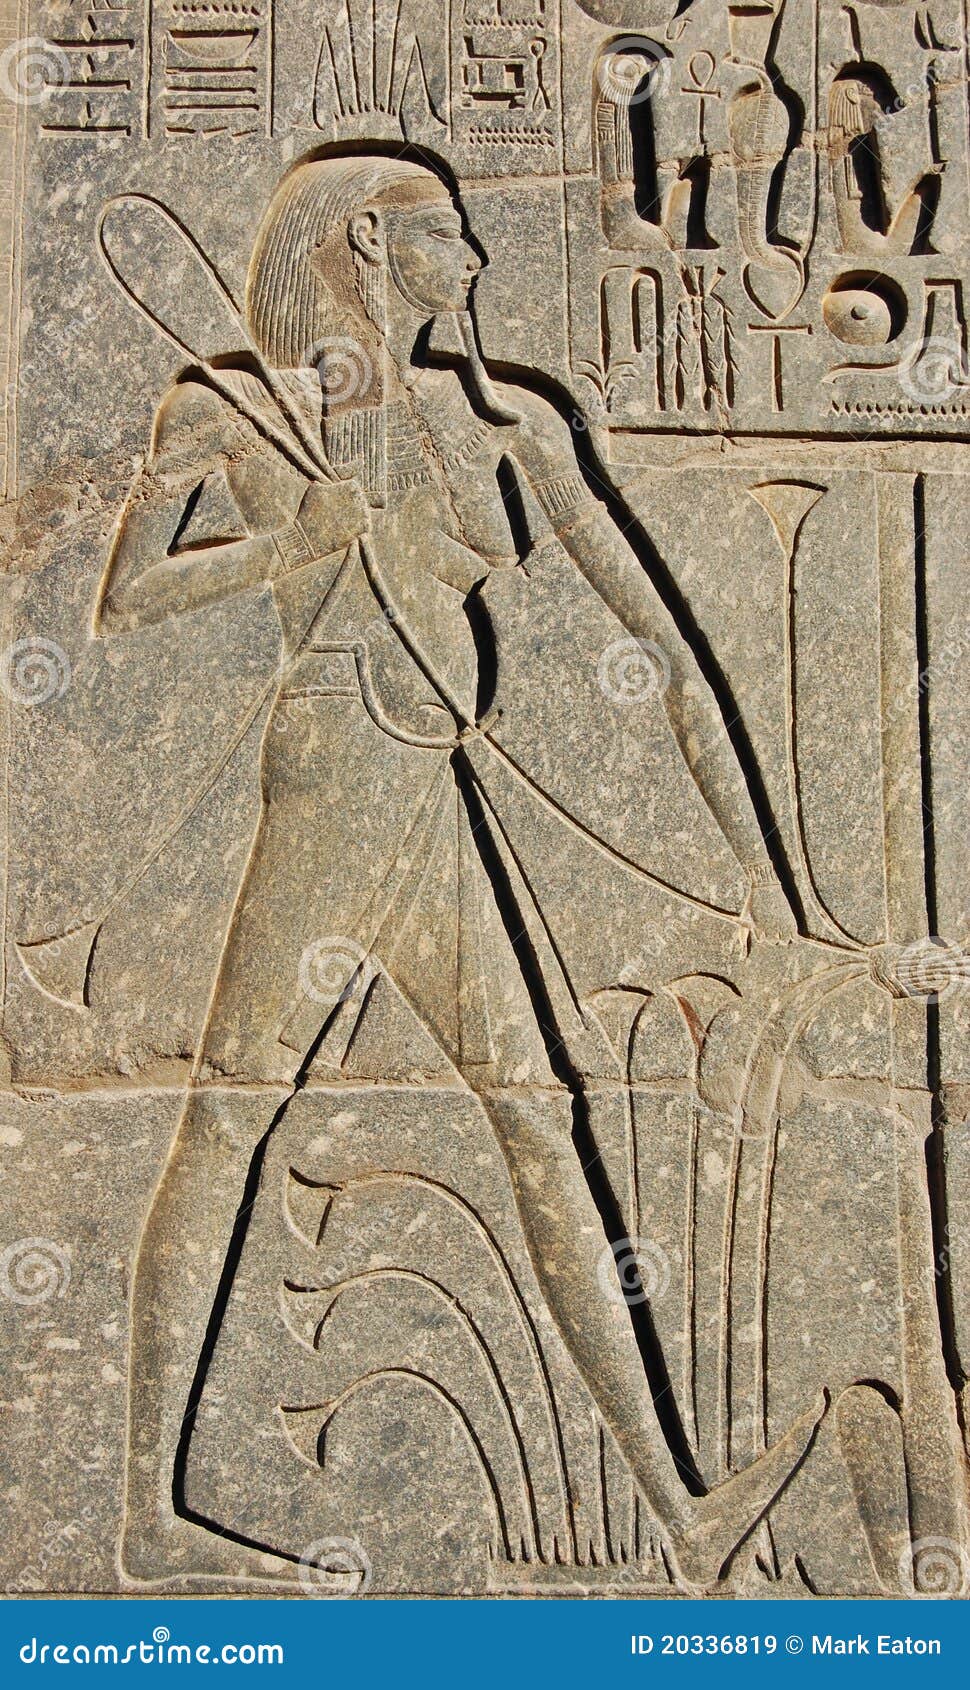 hieroglyph of a farmer